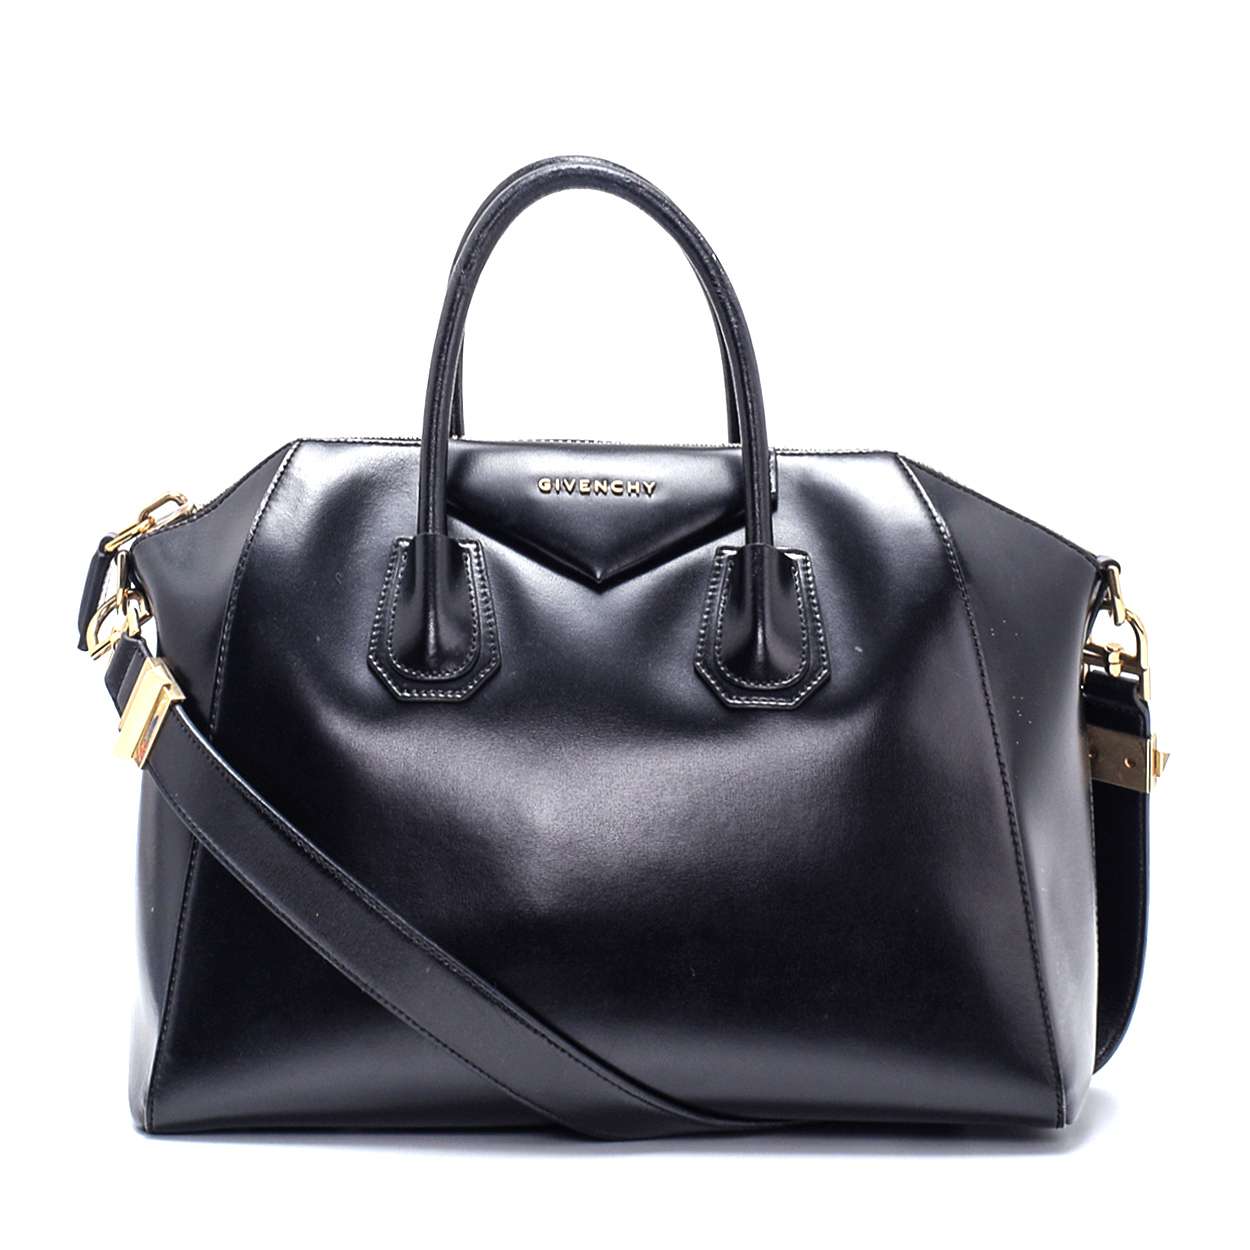 Gıvenchy Black Leather Antigona Medium Bag